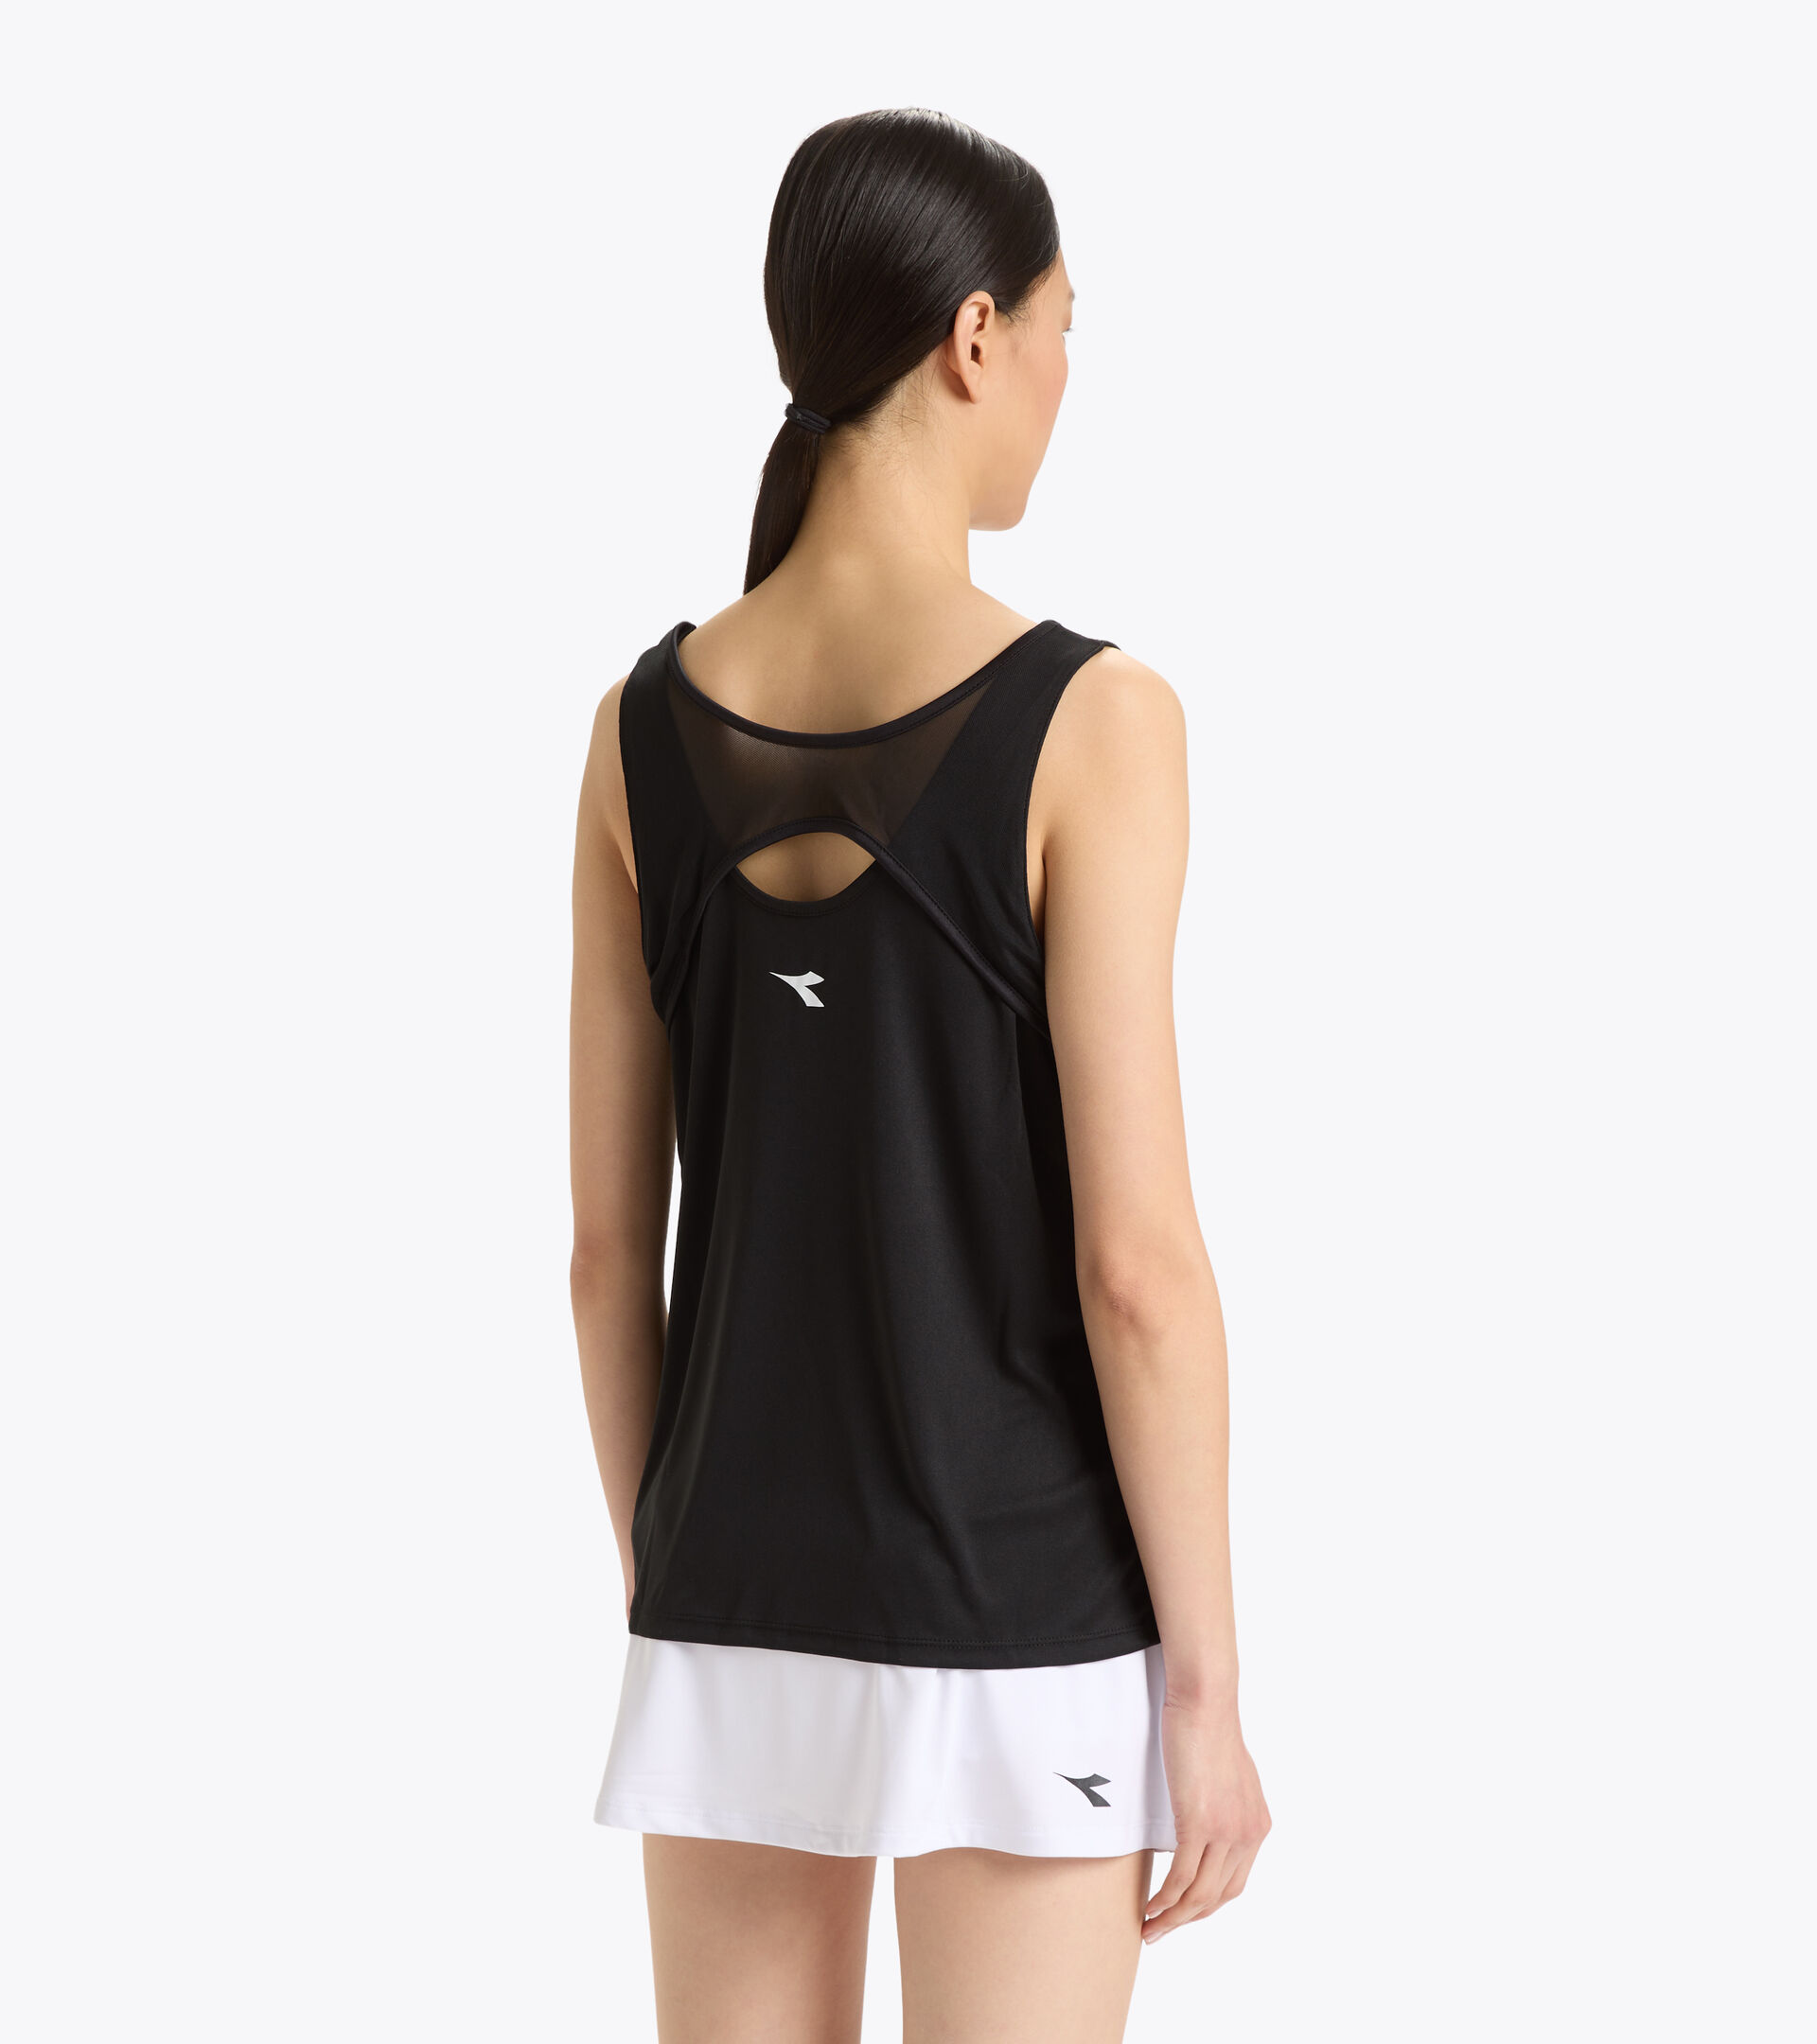 Camiseta sin mangas de tenis - Mujer L. CORE TANK NEGRO - Diadora